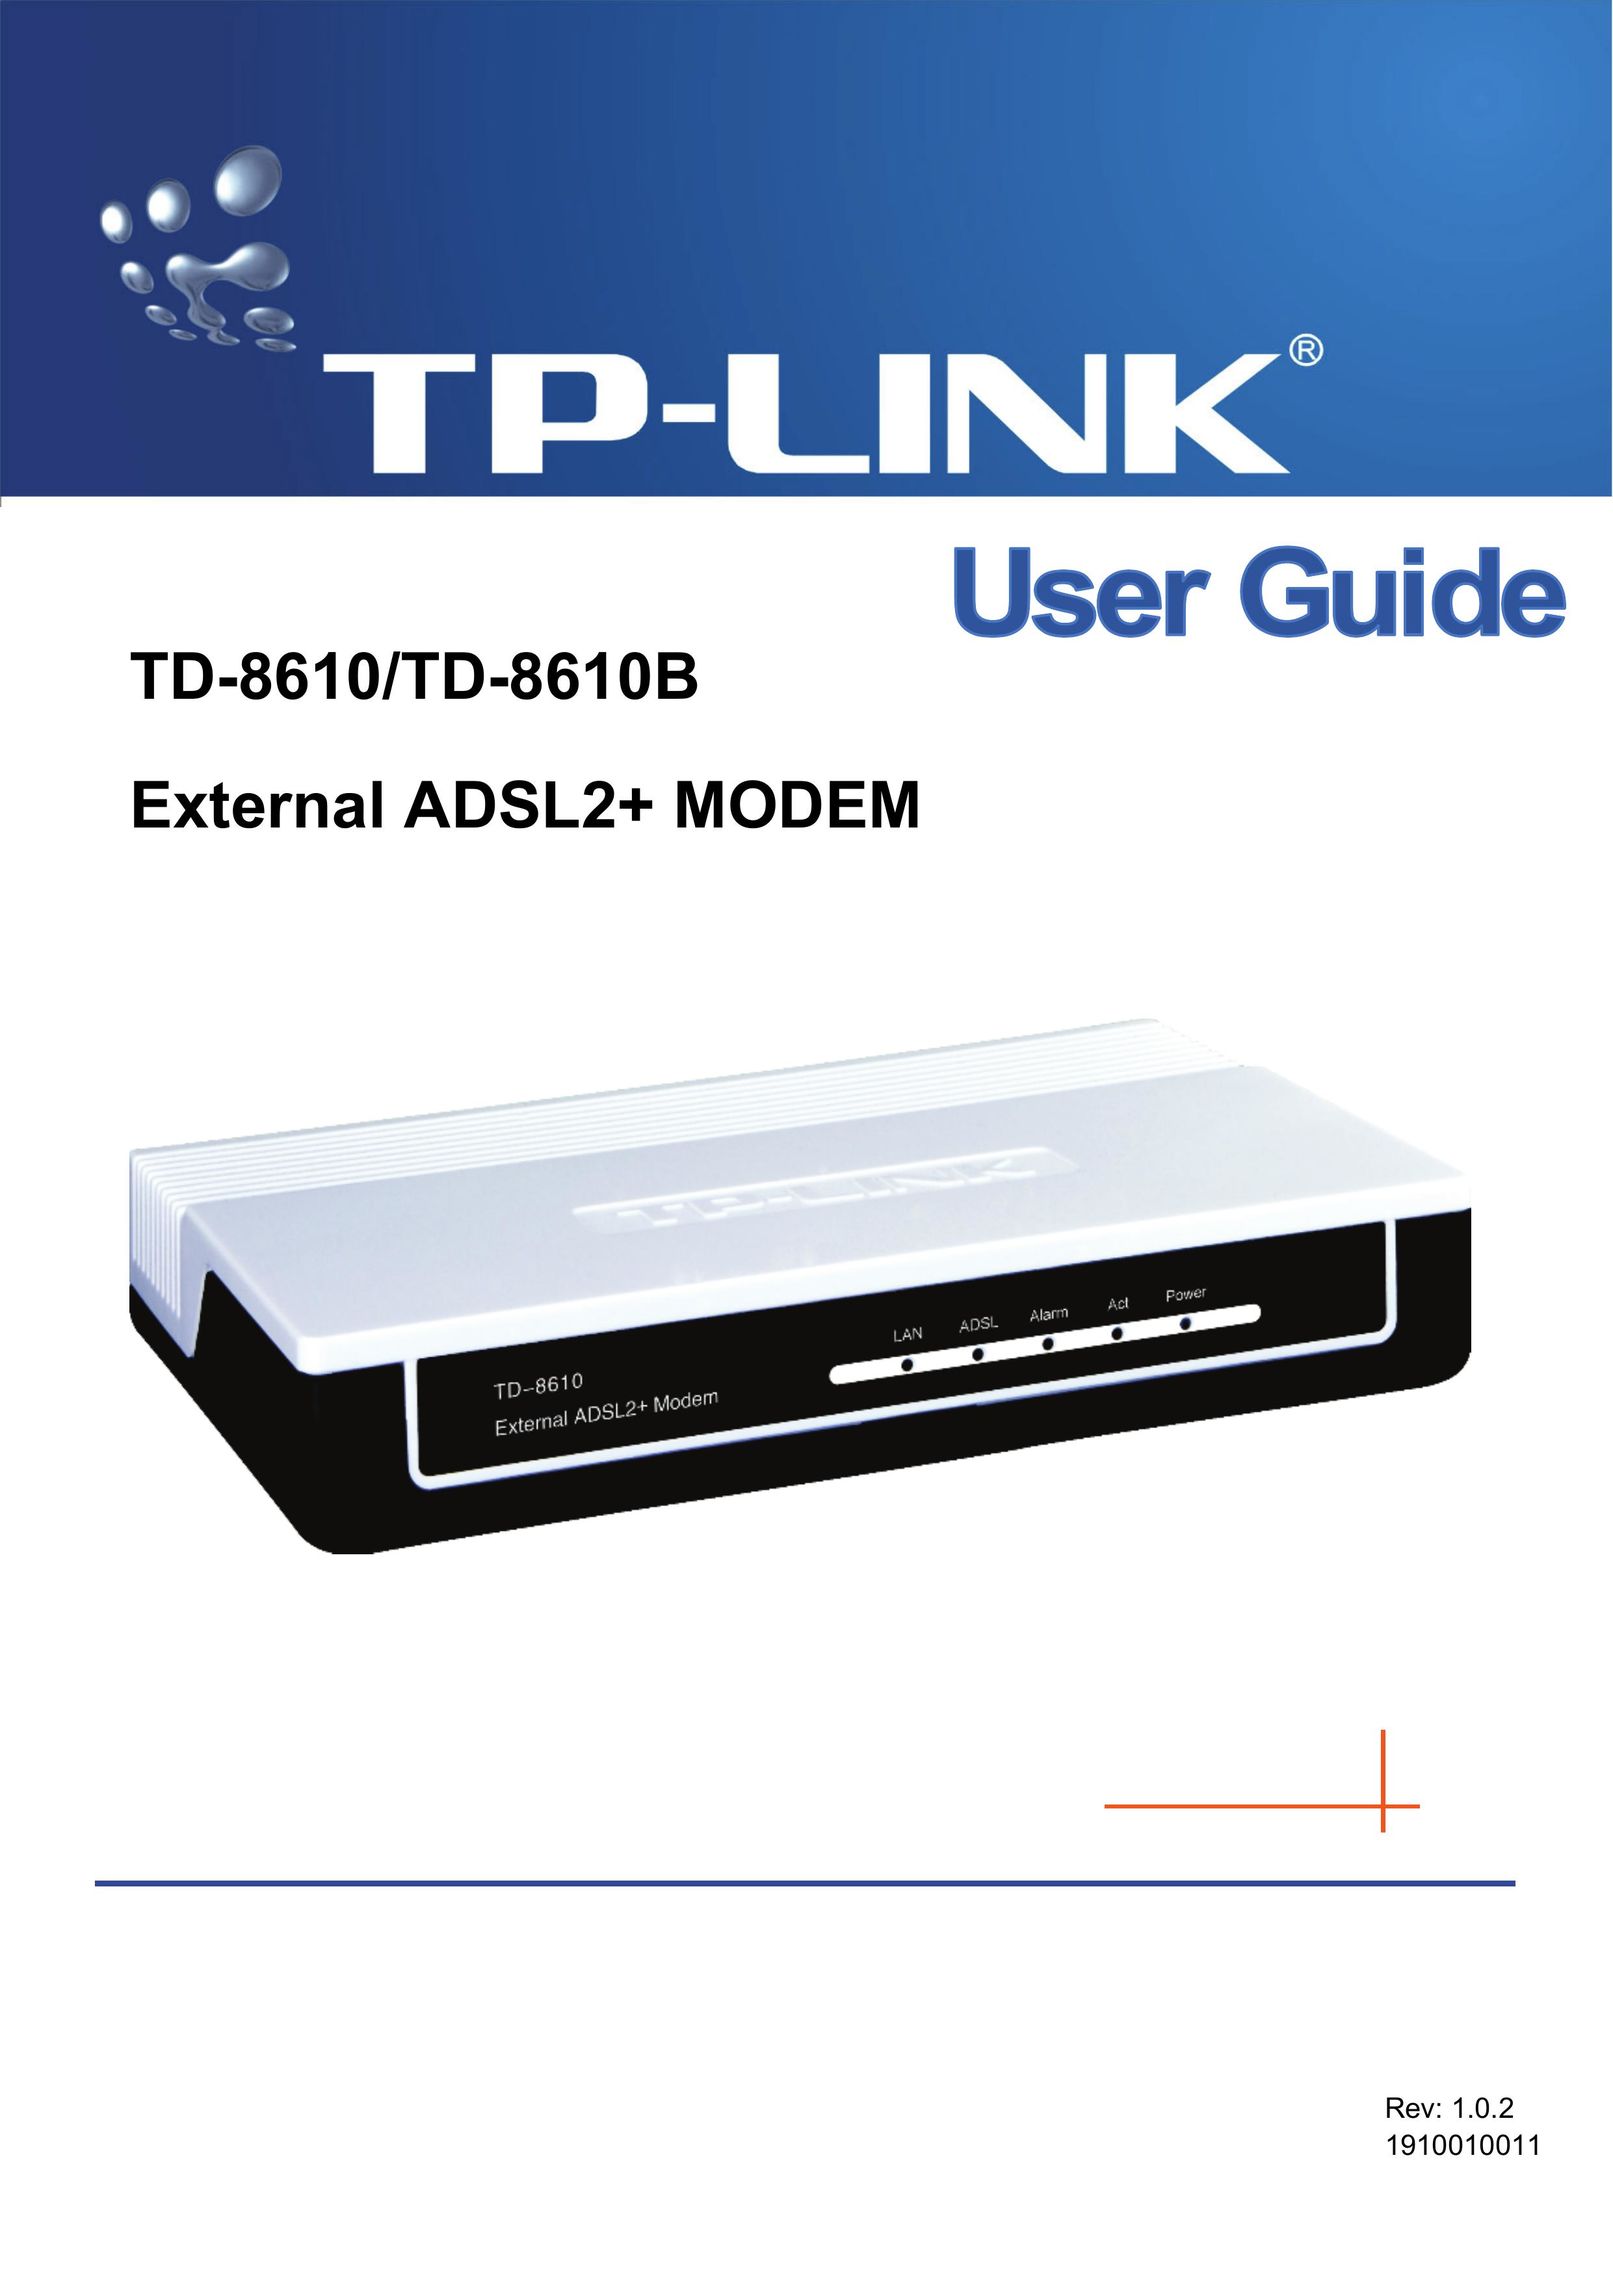 TP-Link TD-861B Modem User Manual